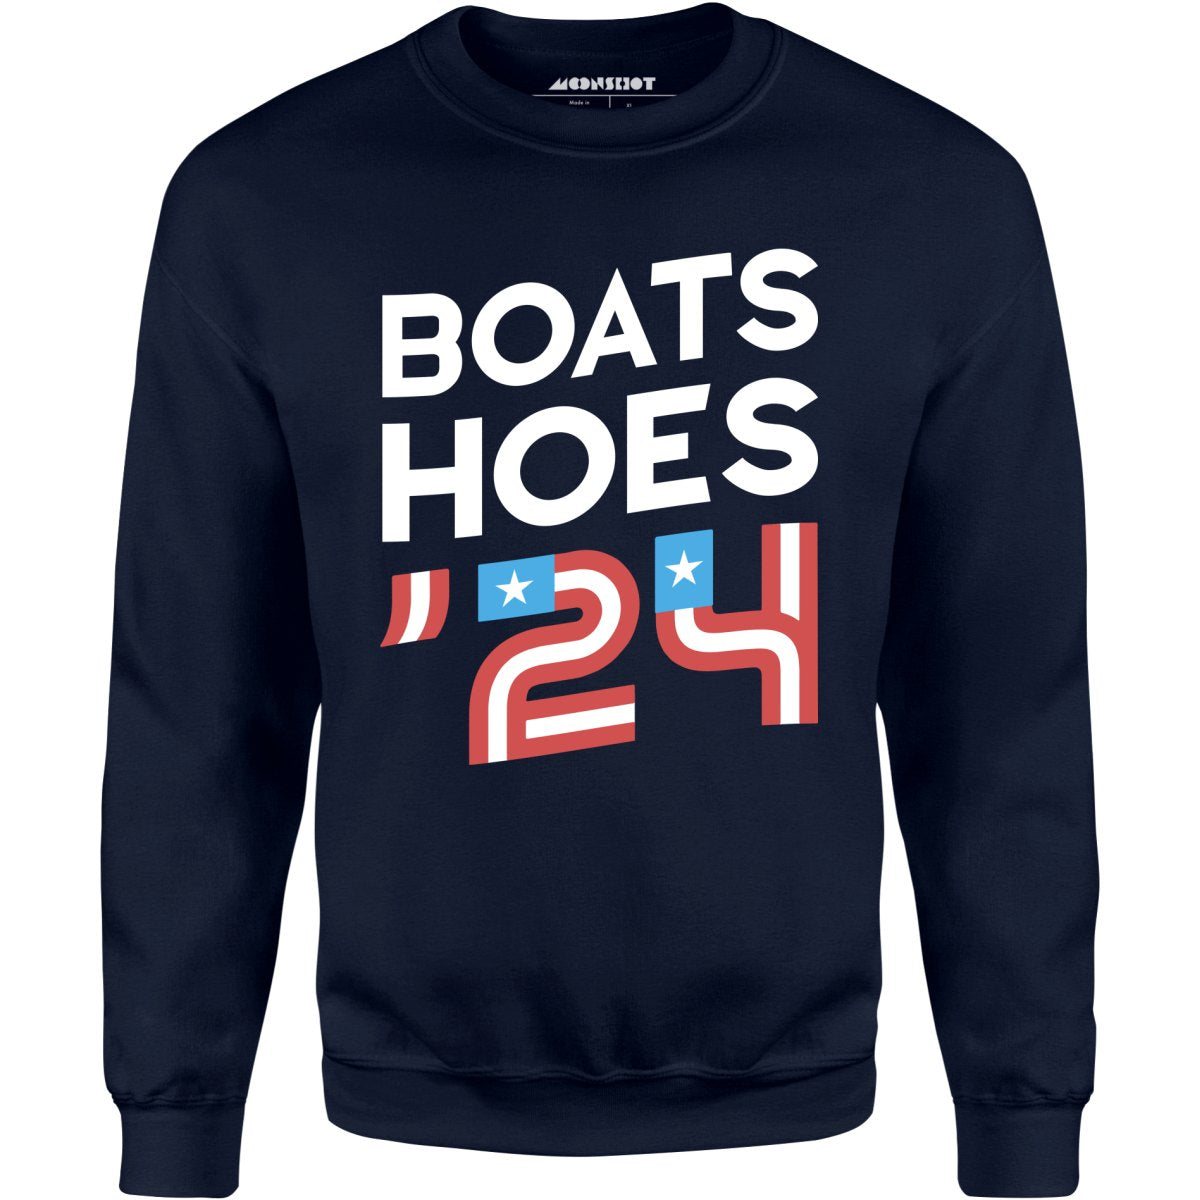 Boats & Hoes '24 - Unisex Sweatshirt